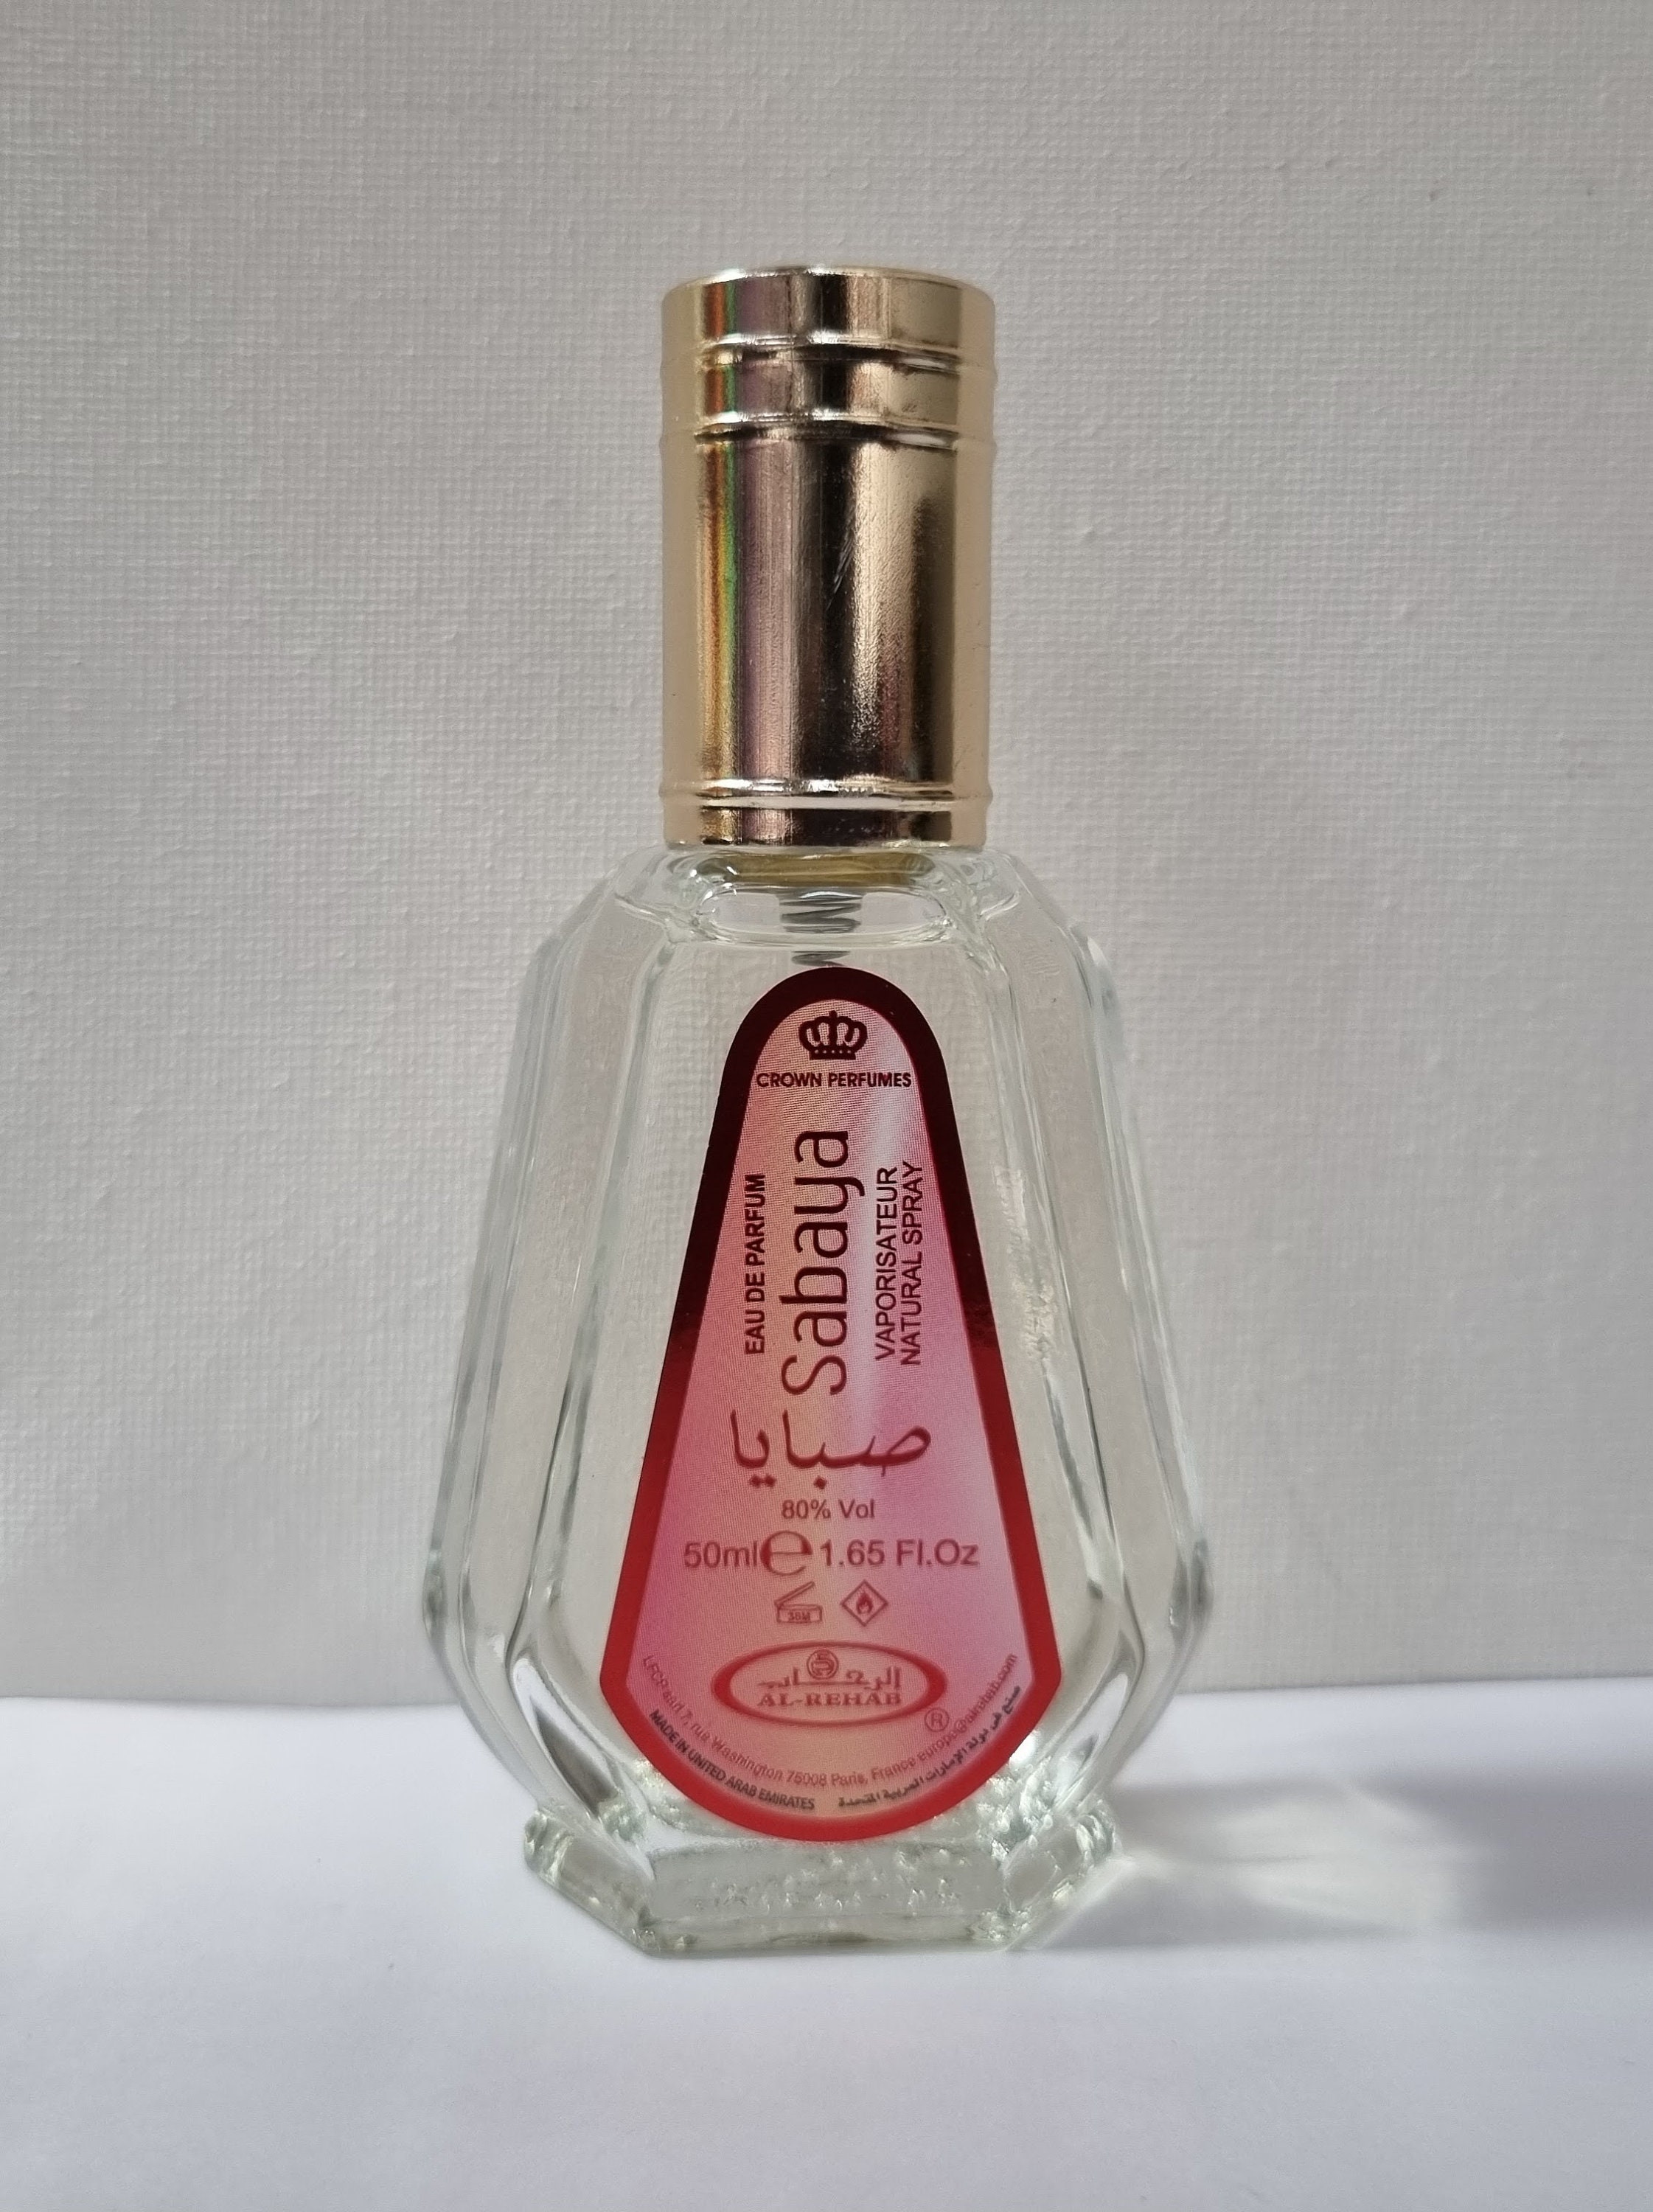 Sabaya Eau De Parfum 50ml by Al Rehab Arabian Natural Spray. 